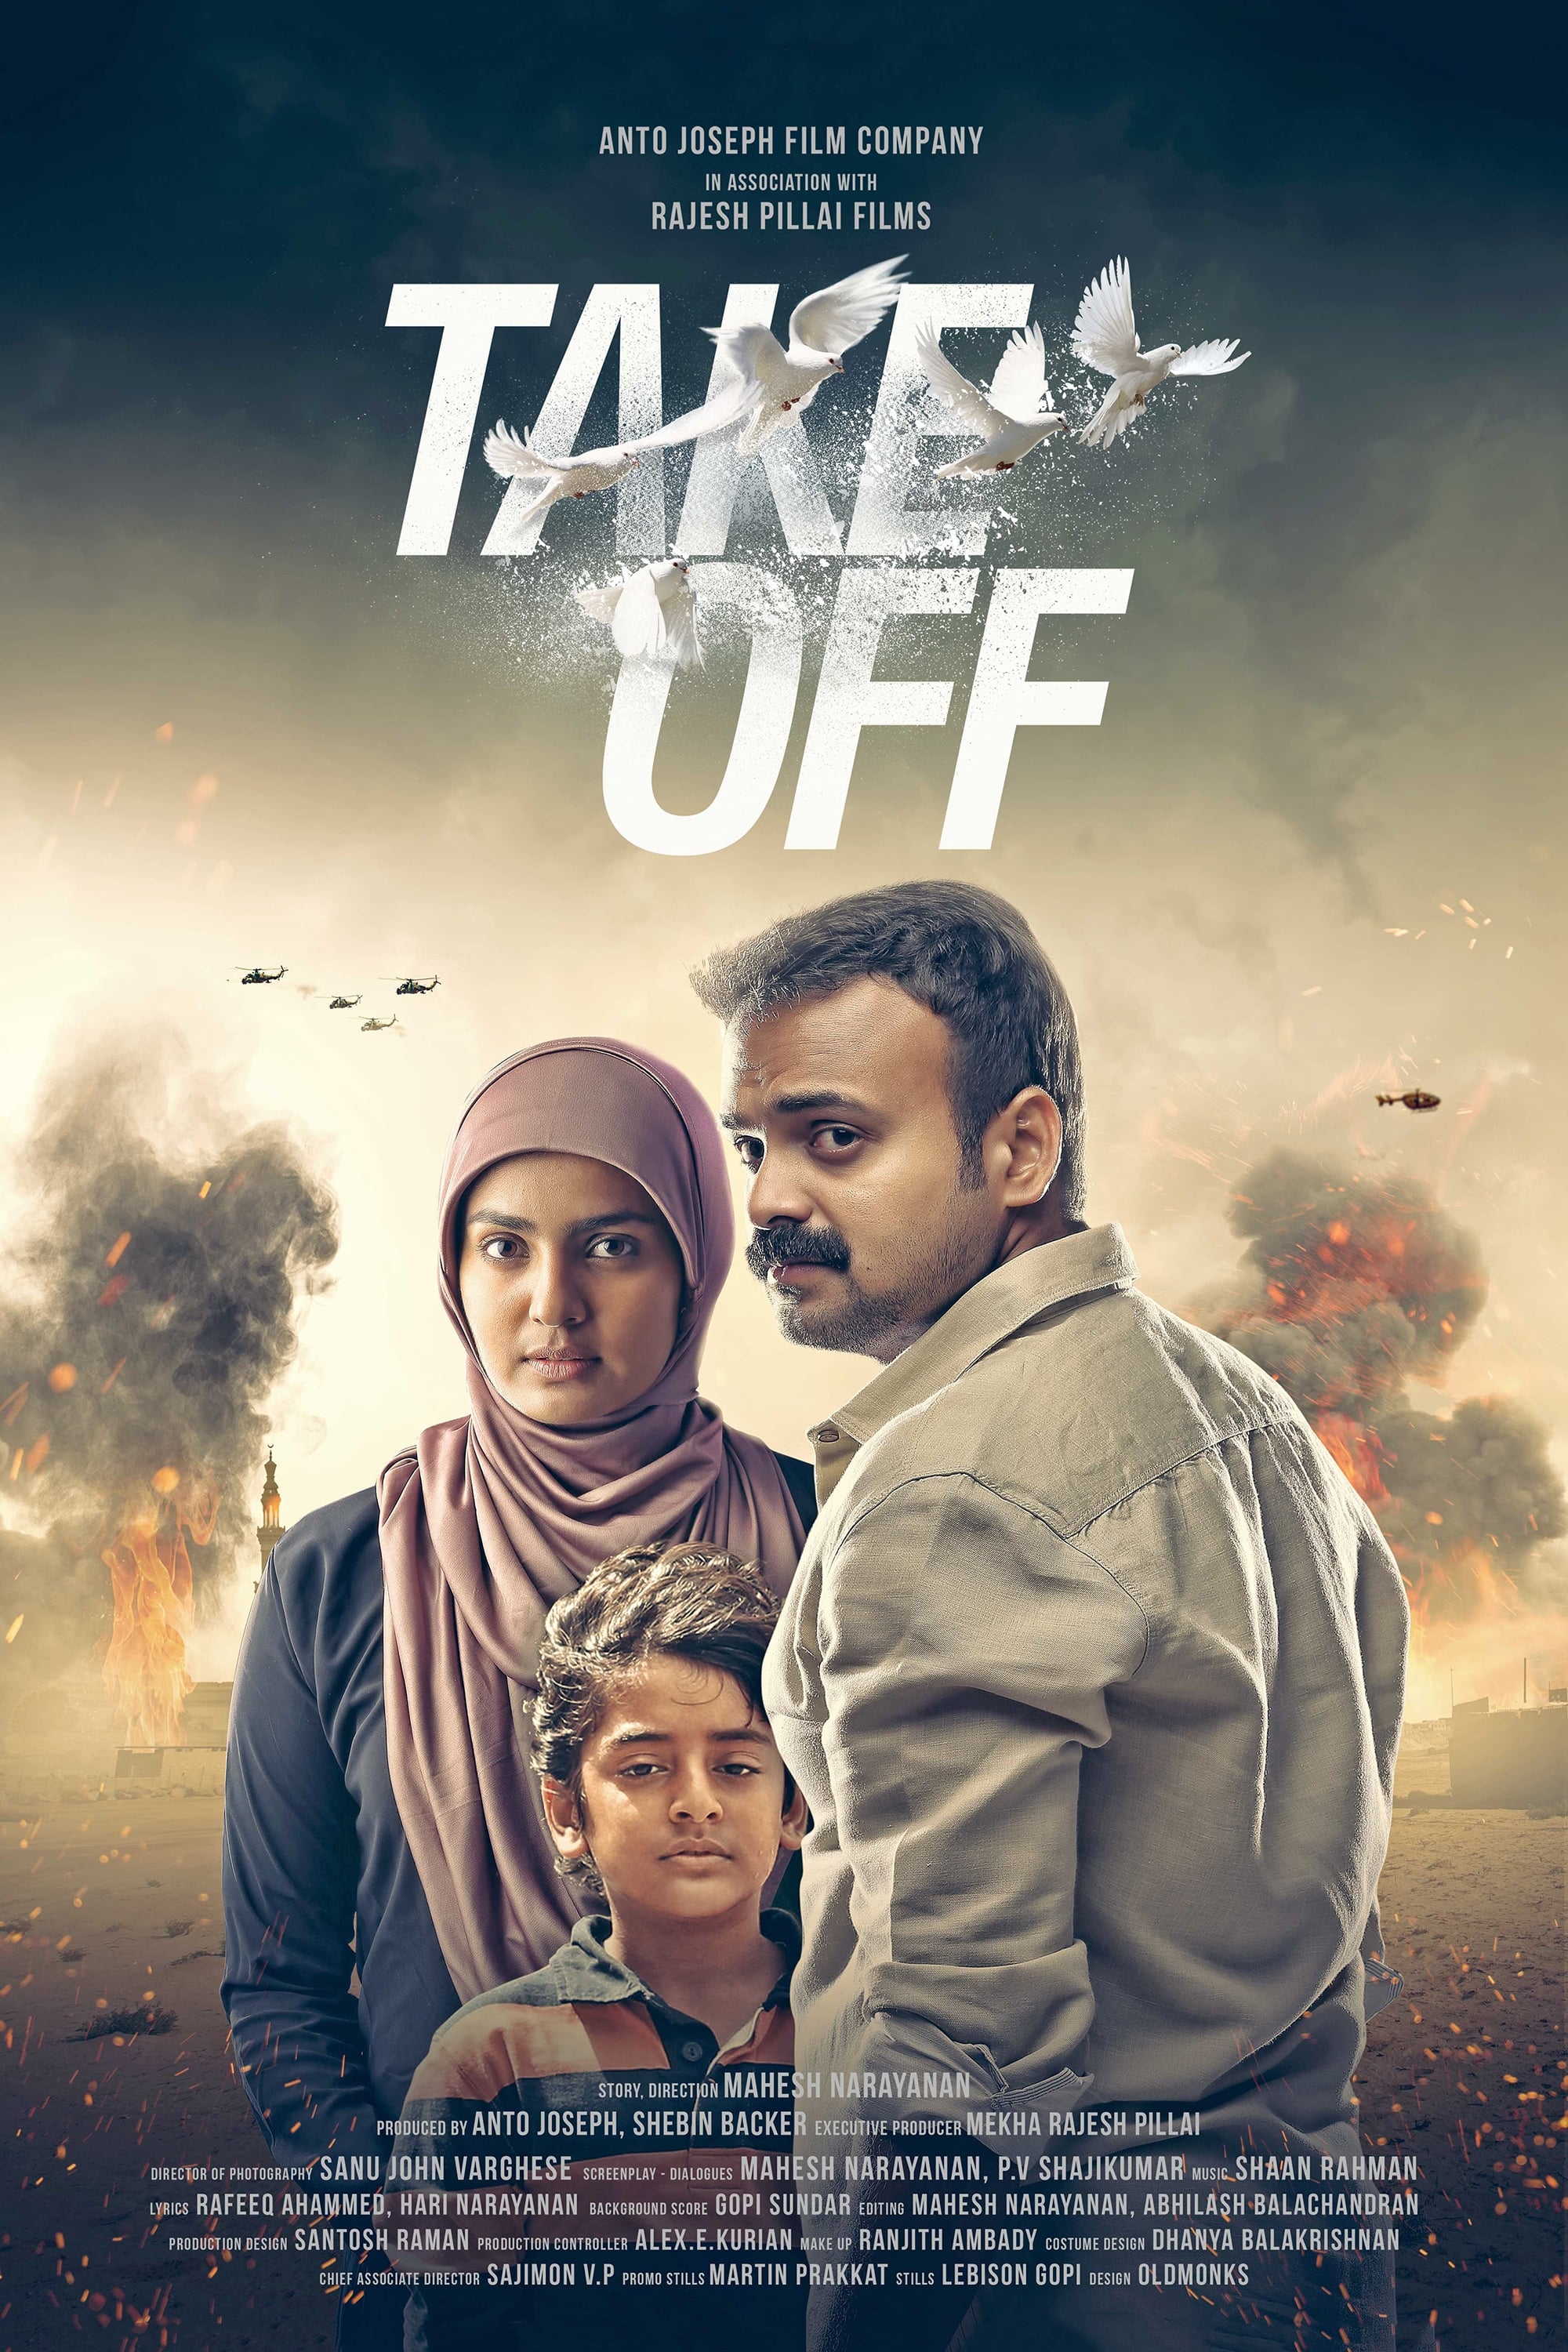 Take Off (2017)